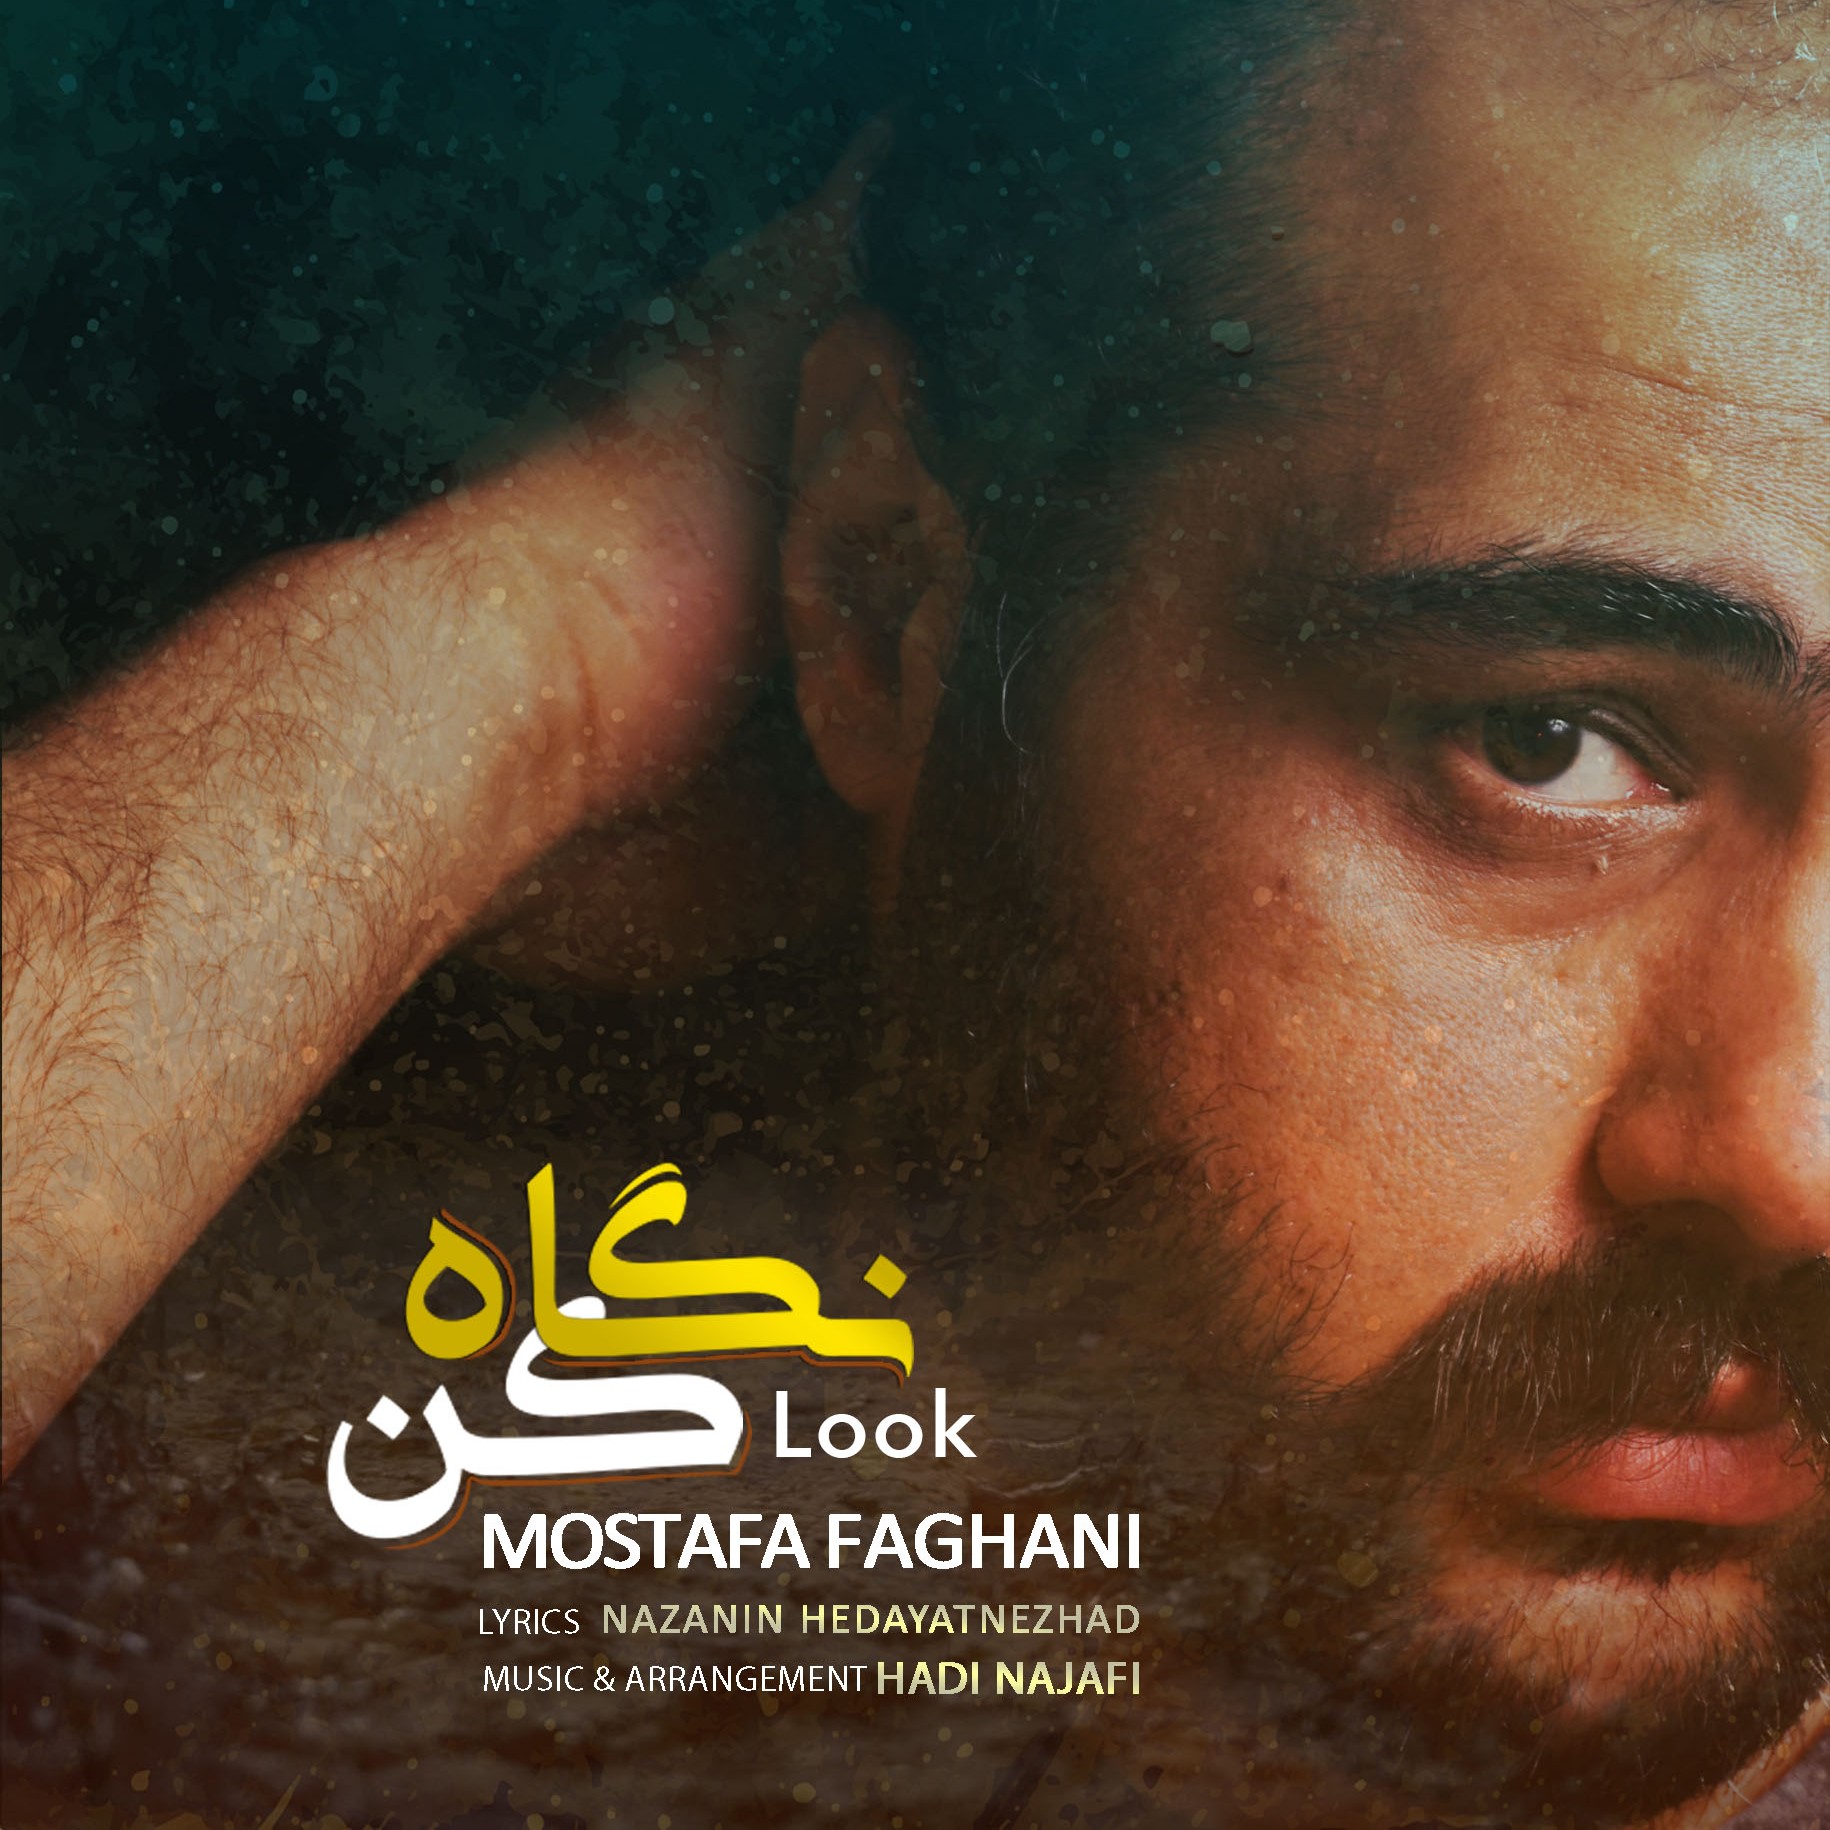 Mostafa Faghani – Negah kon